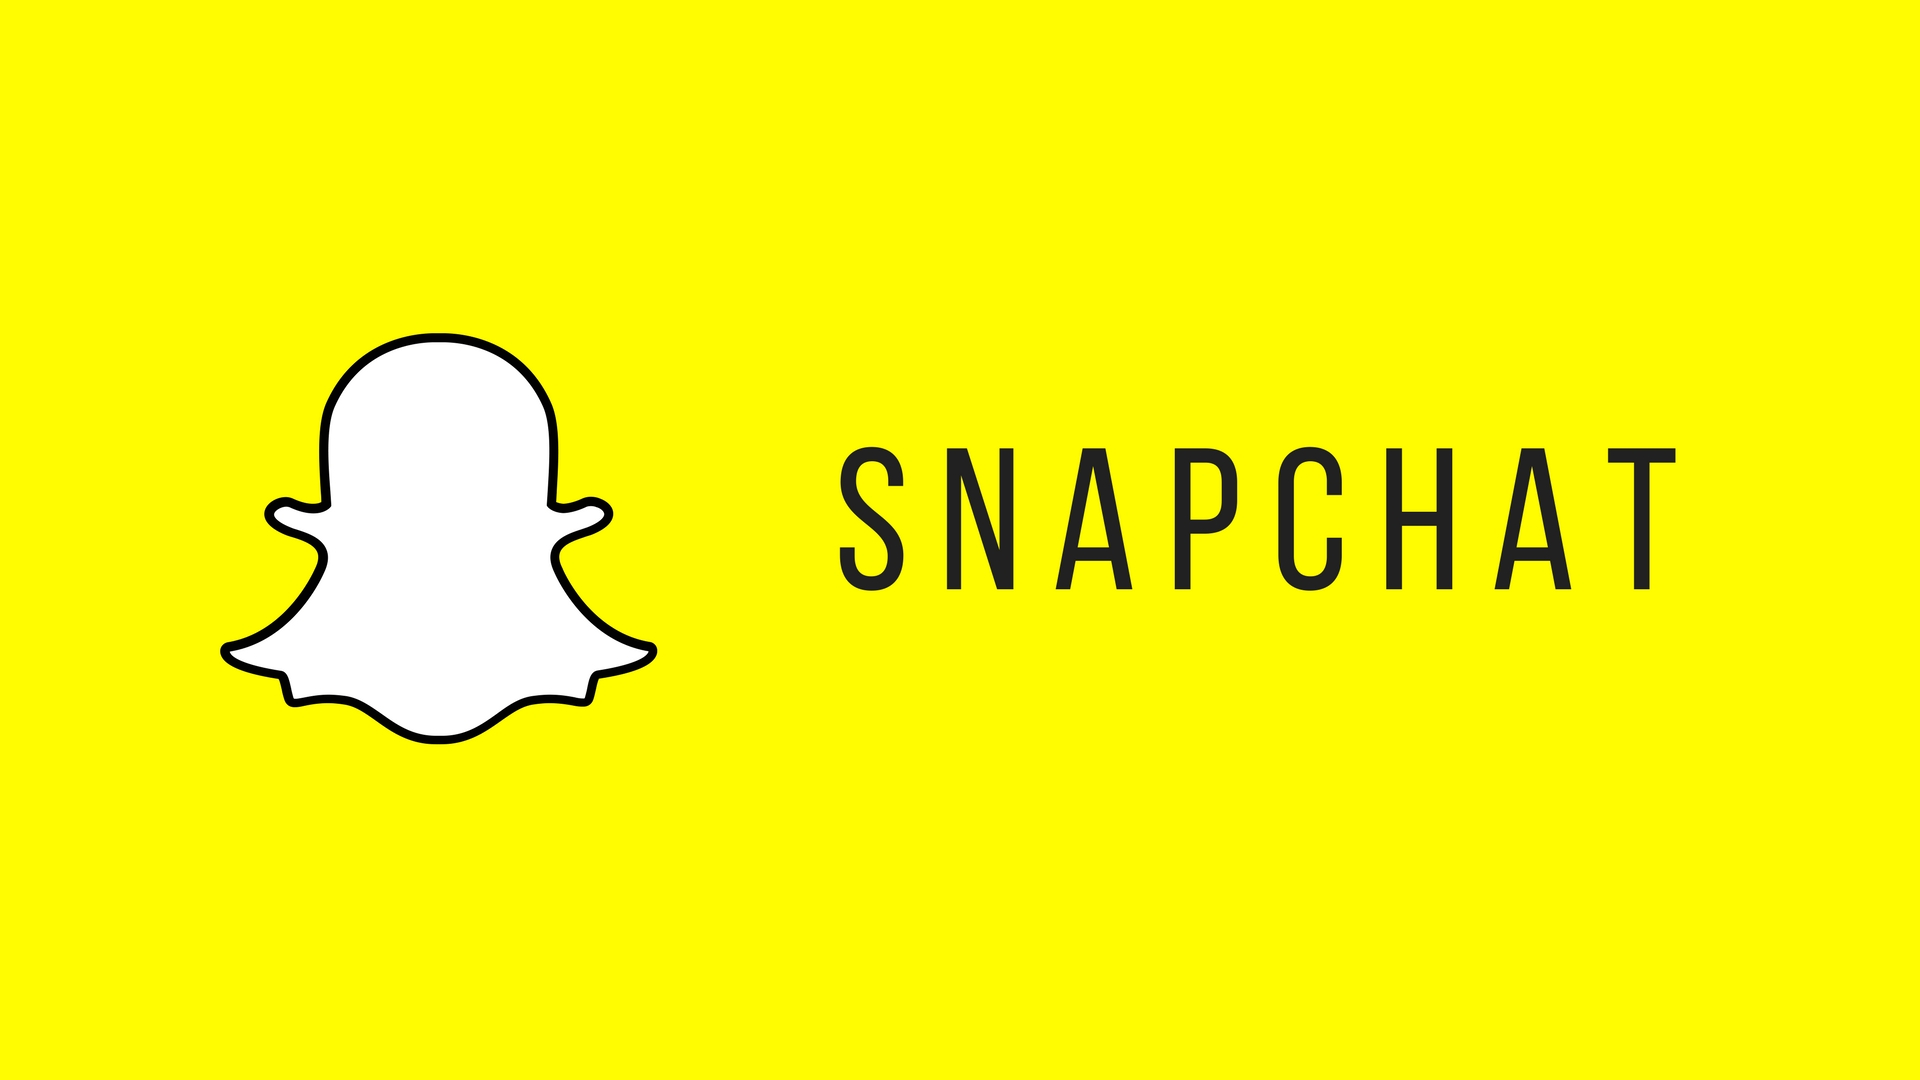 Snapchat Hesabı Nasıl Silinir?